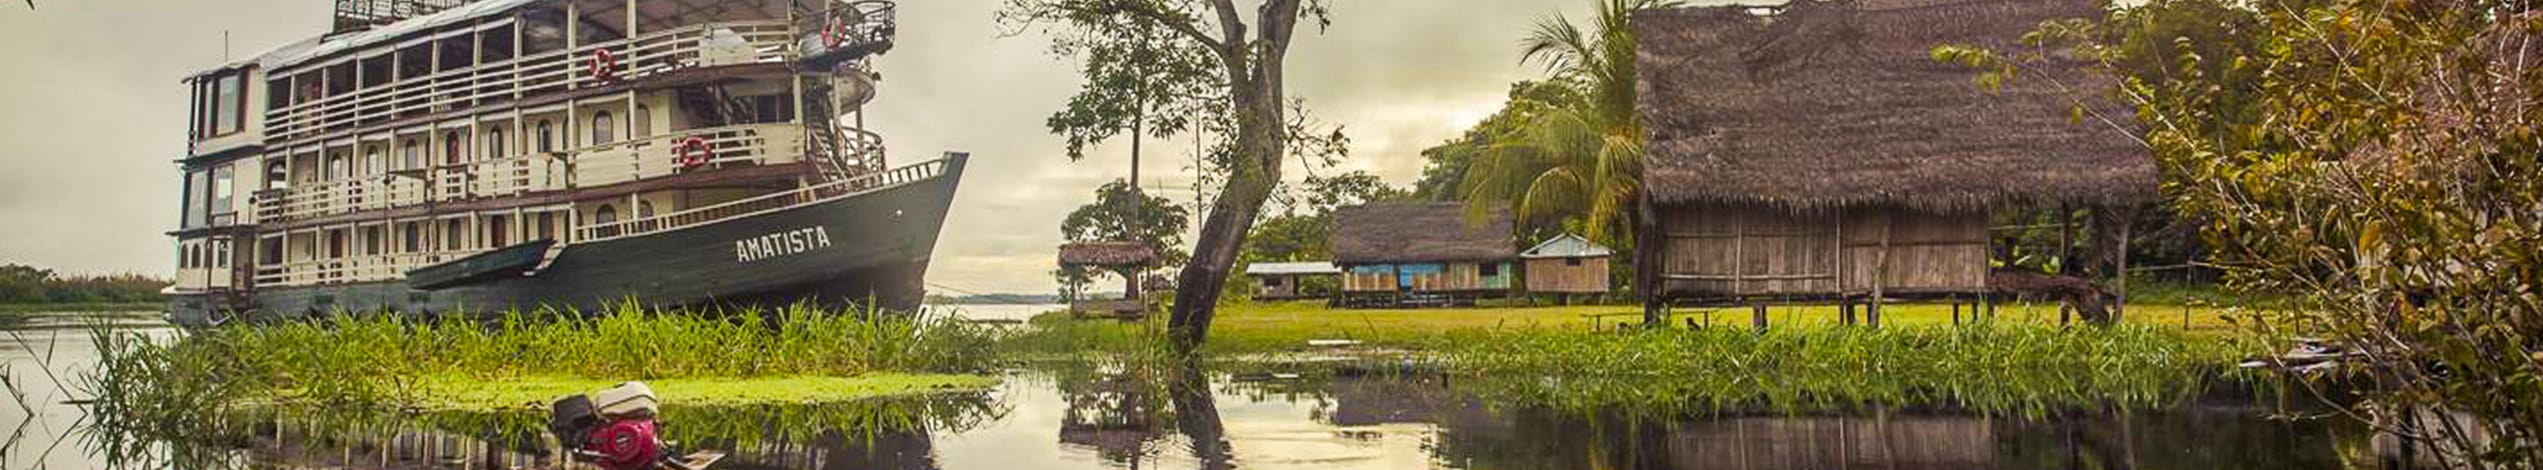 Eventyr på Amazon floden